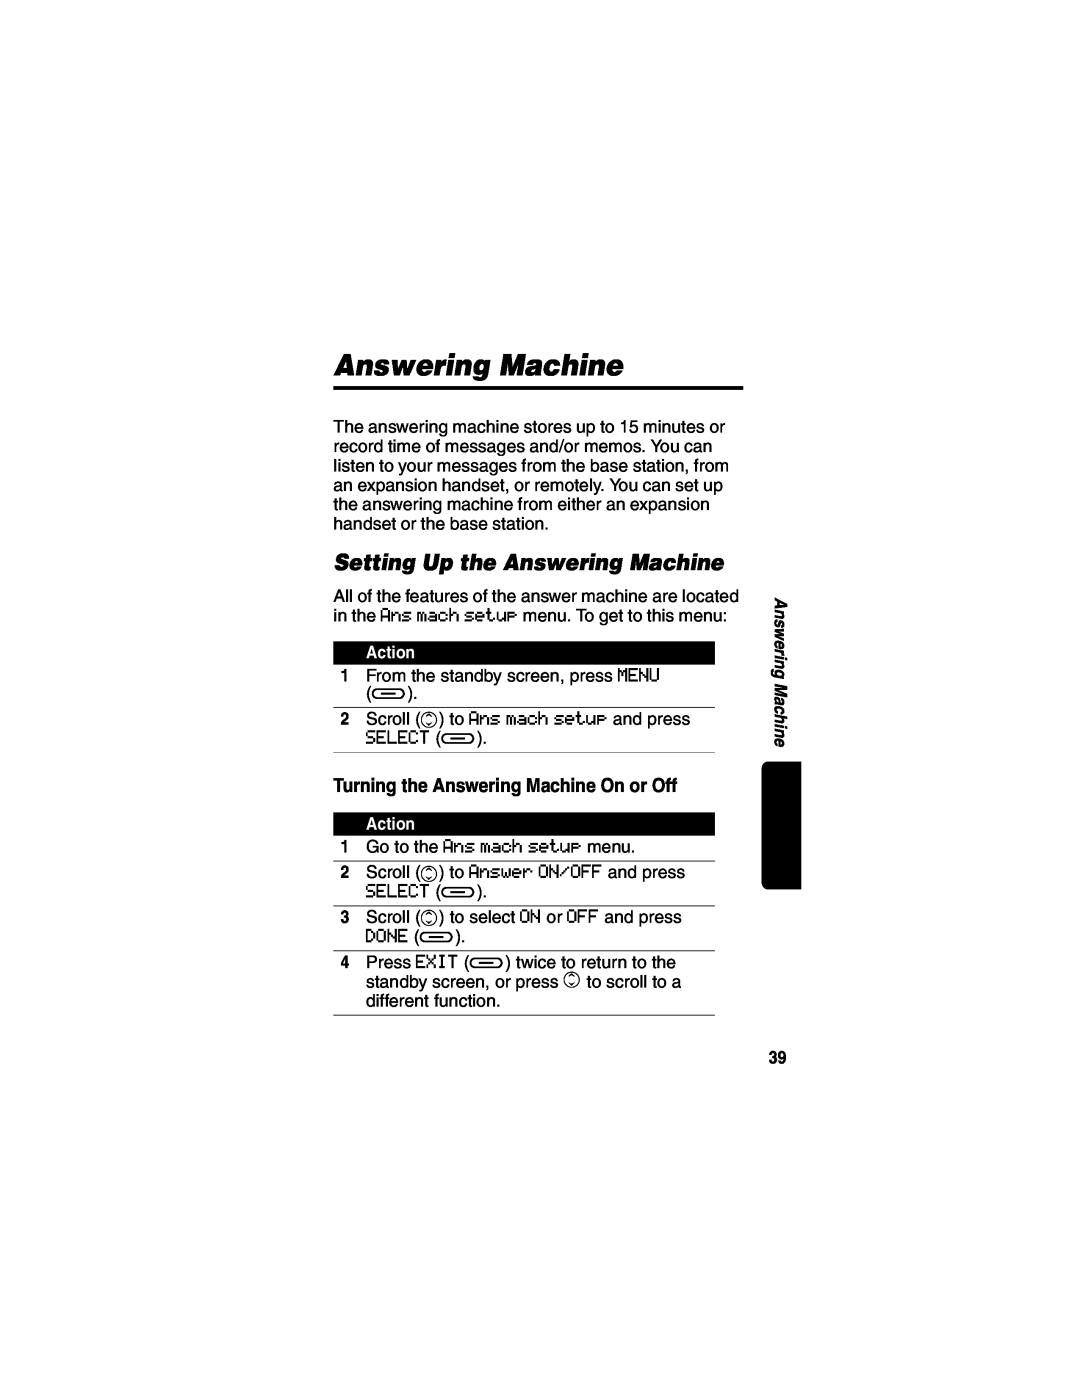 Motorola MD490 manual Setting Up the Answering Machine, Turning the Answering Machine On or Off, Action 